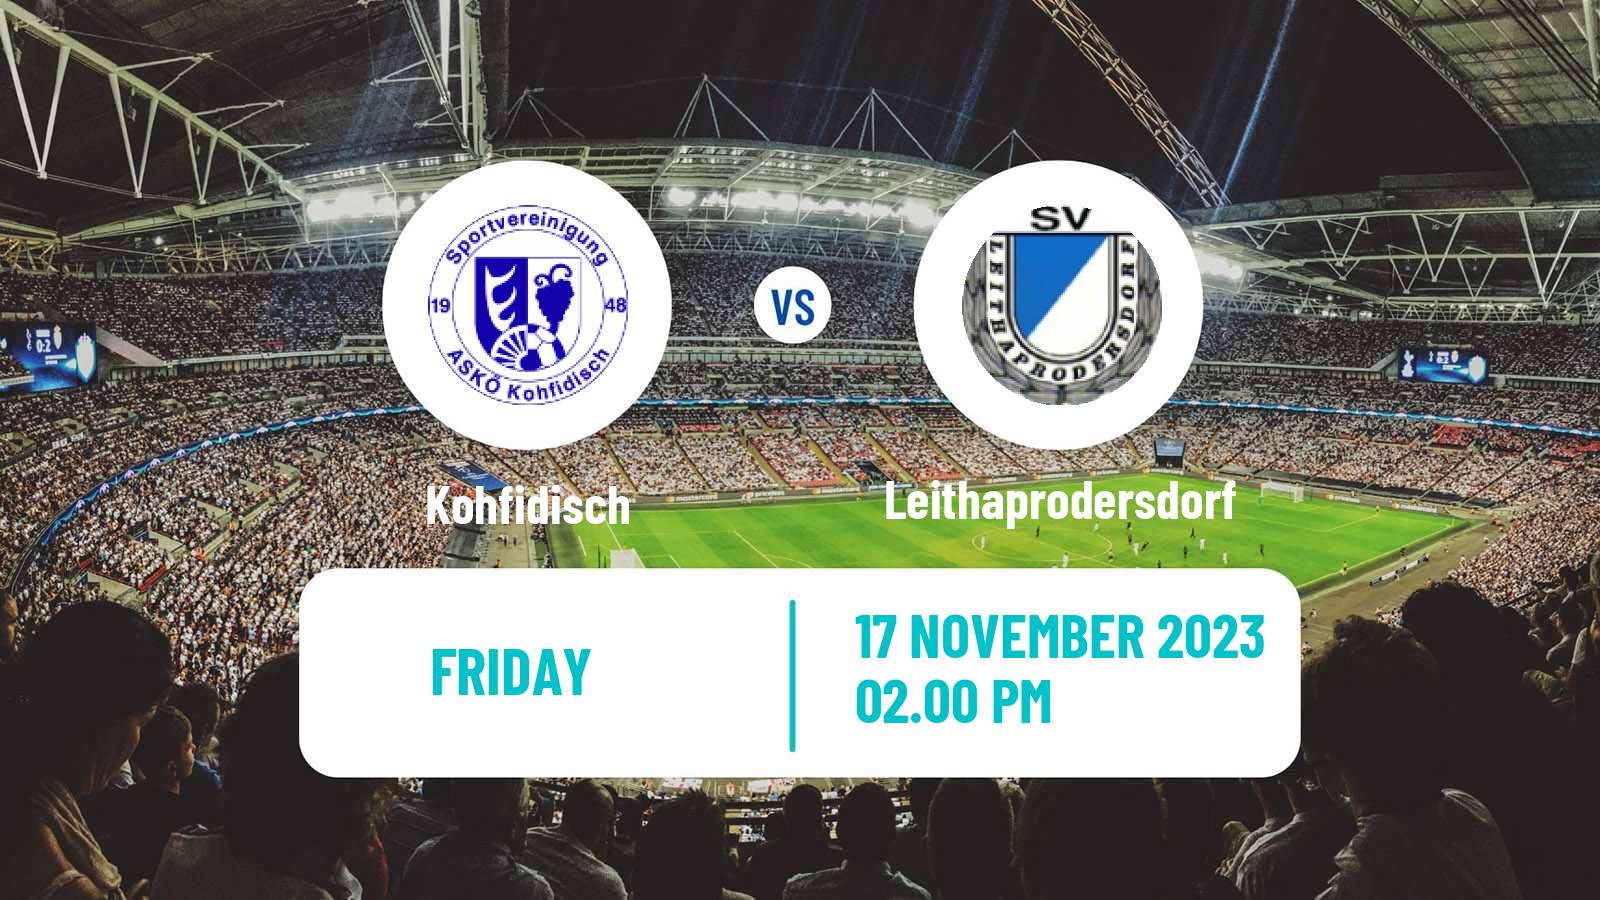 Soccer Austrian Landesliga Burgenland Kohfidisch - Leithaprodersdorf